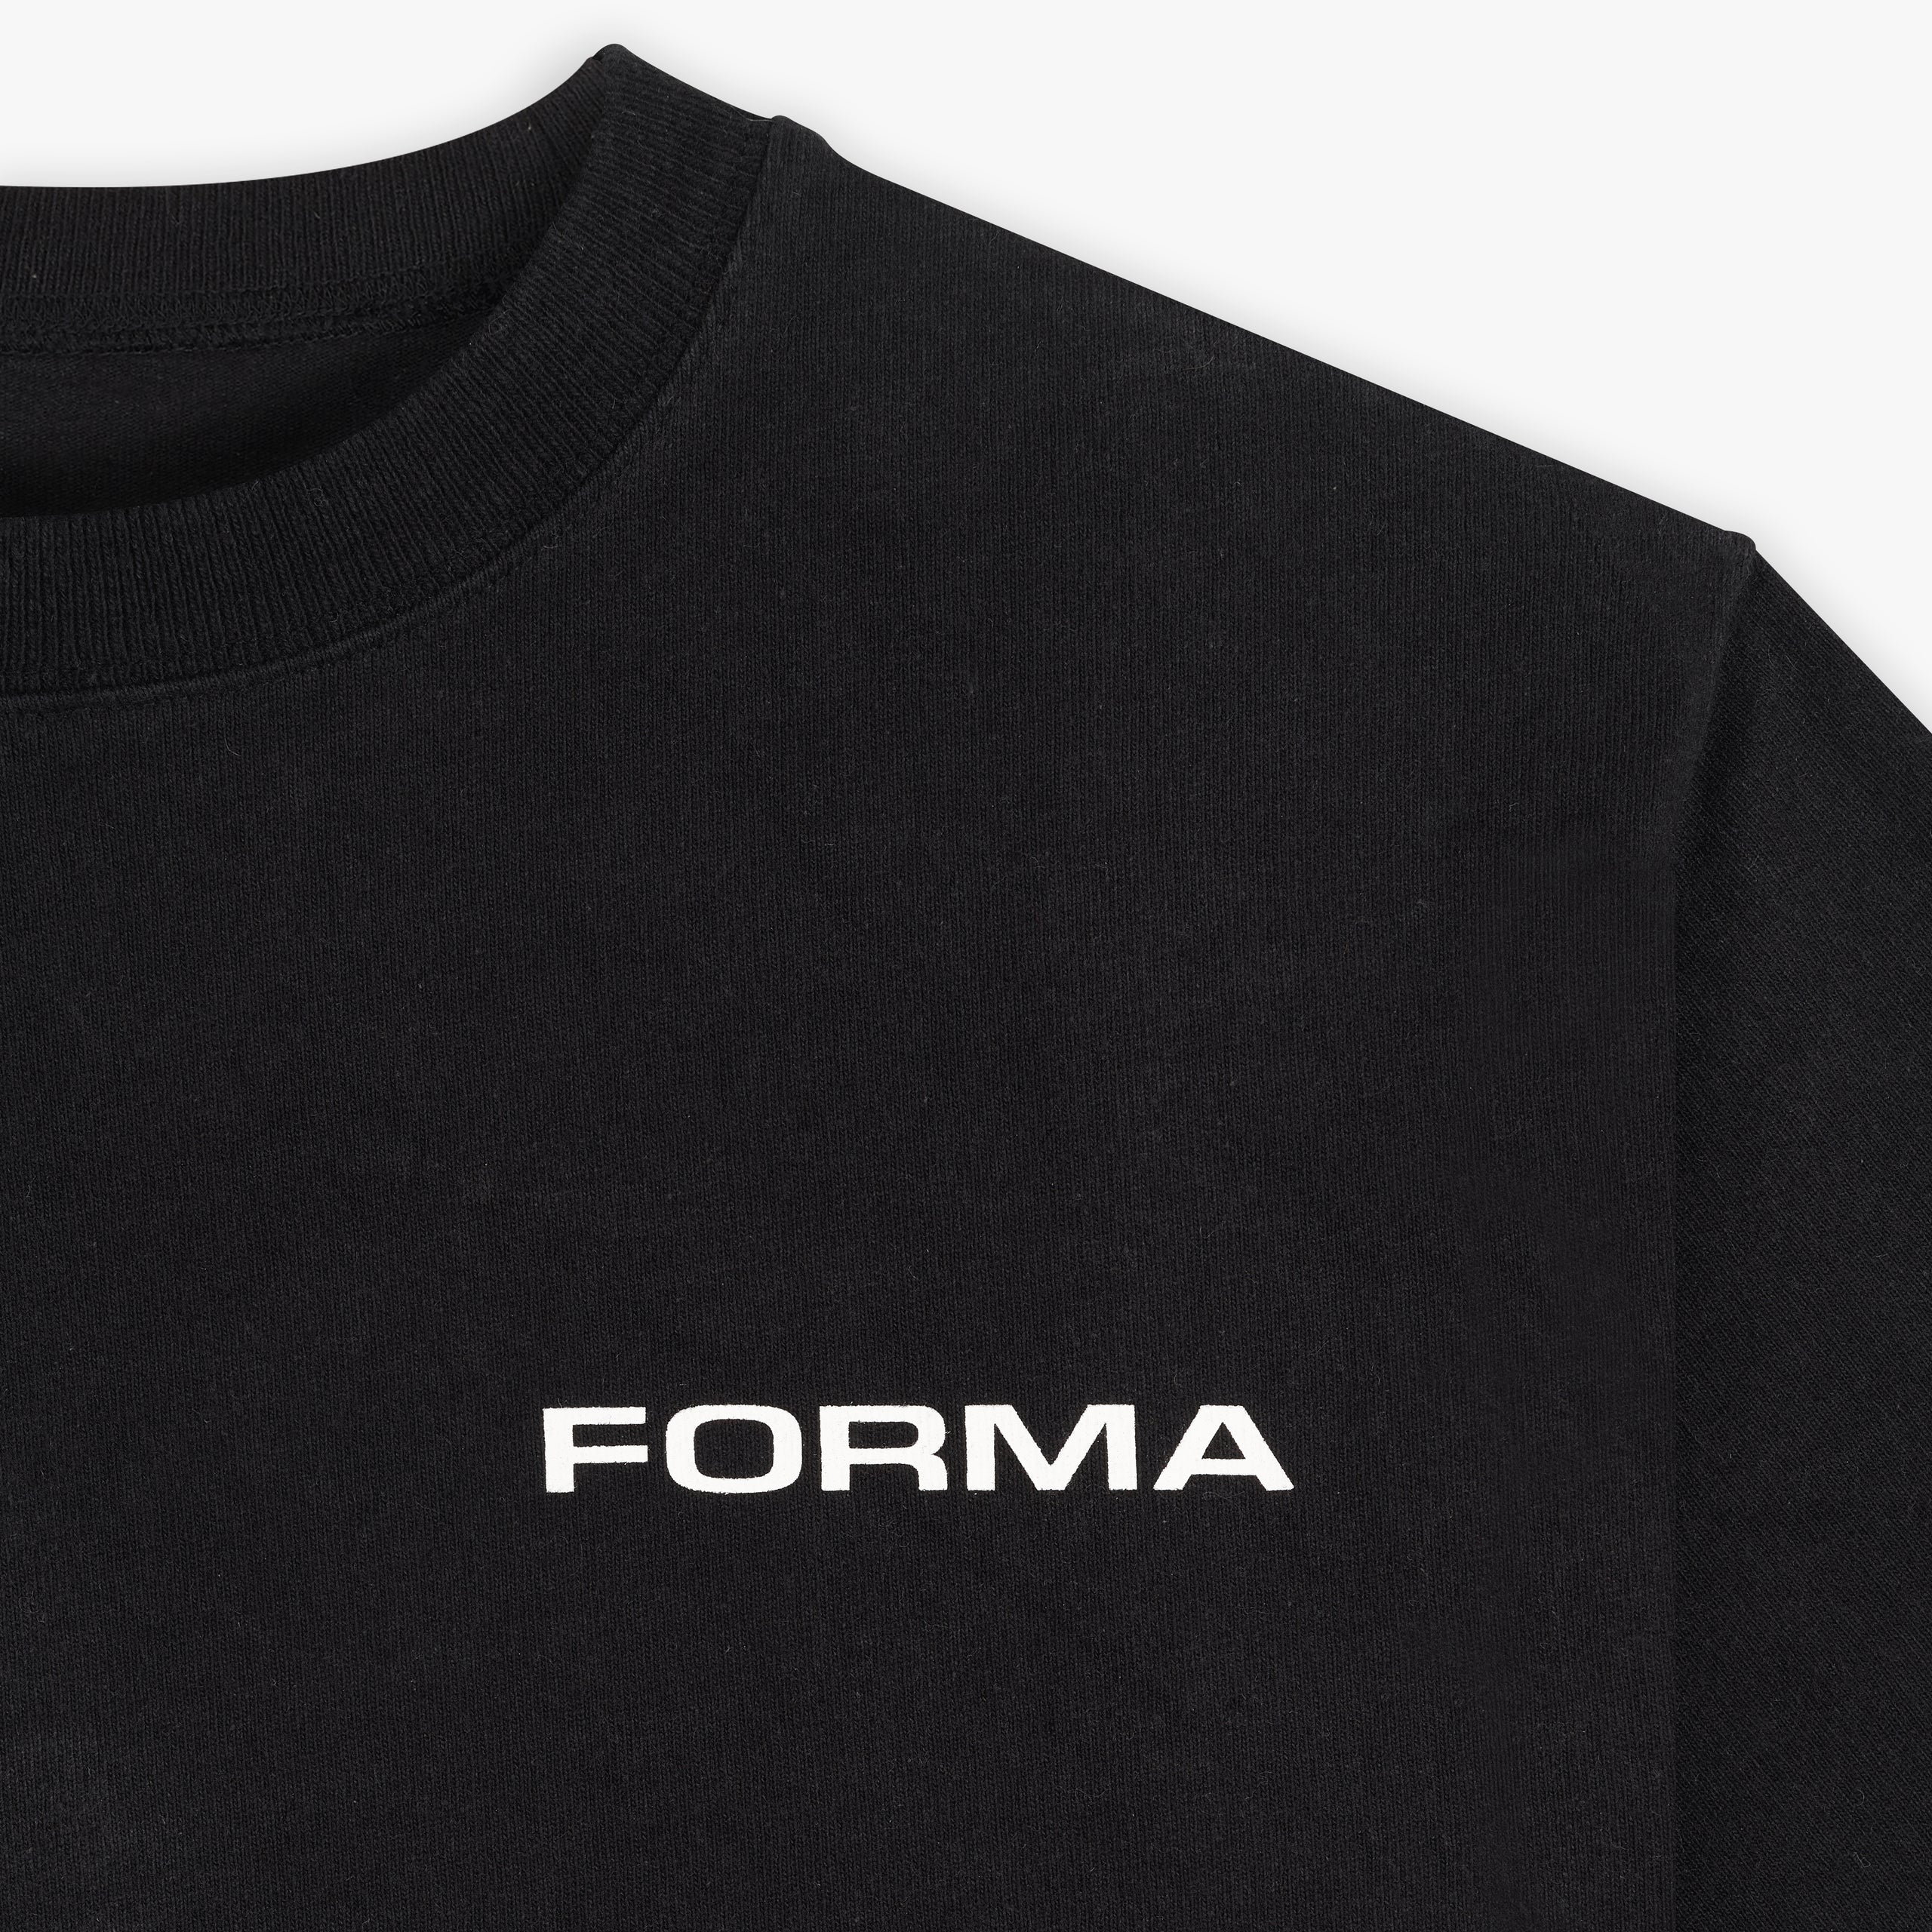 Forma manifesto printed T-shirt